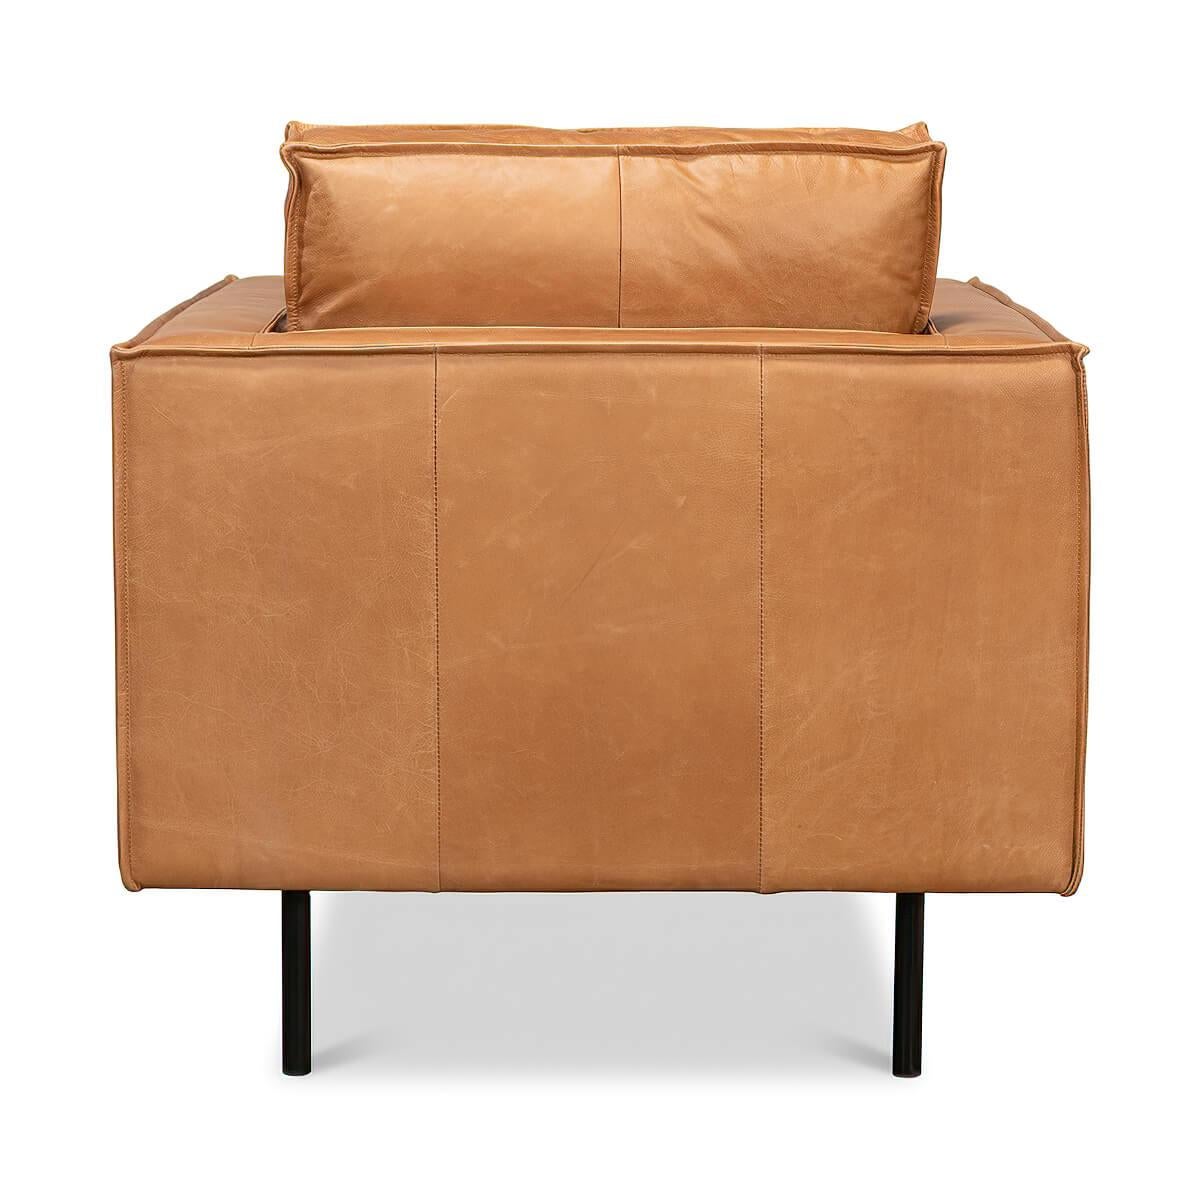 leather club chair modern